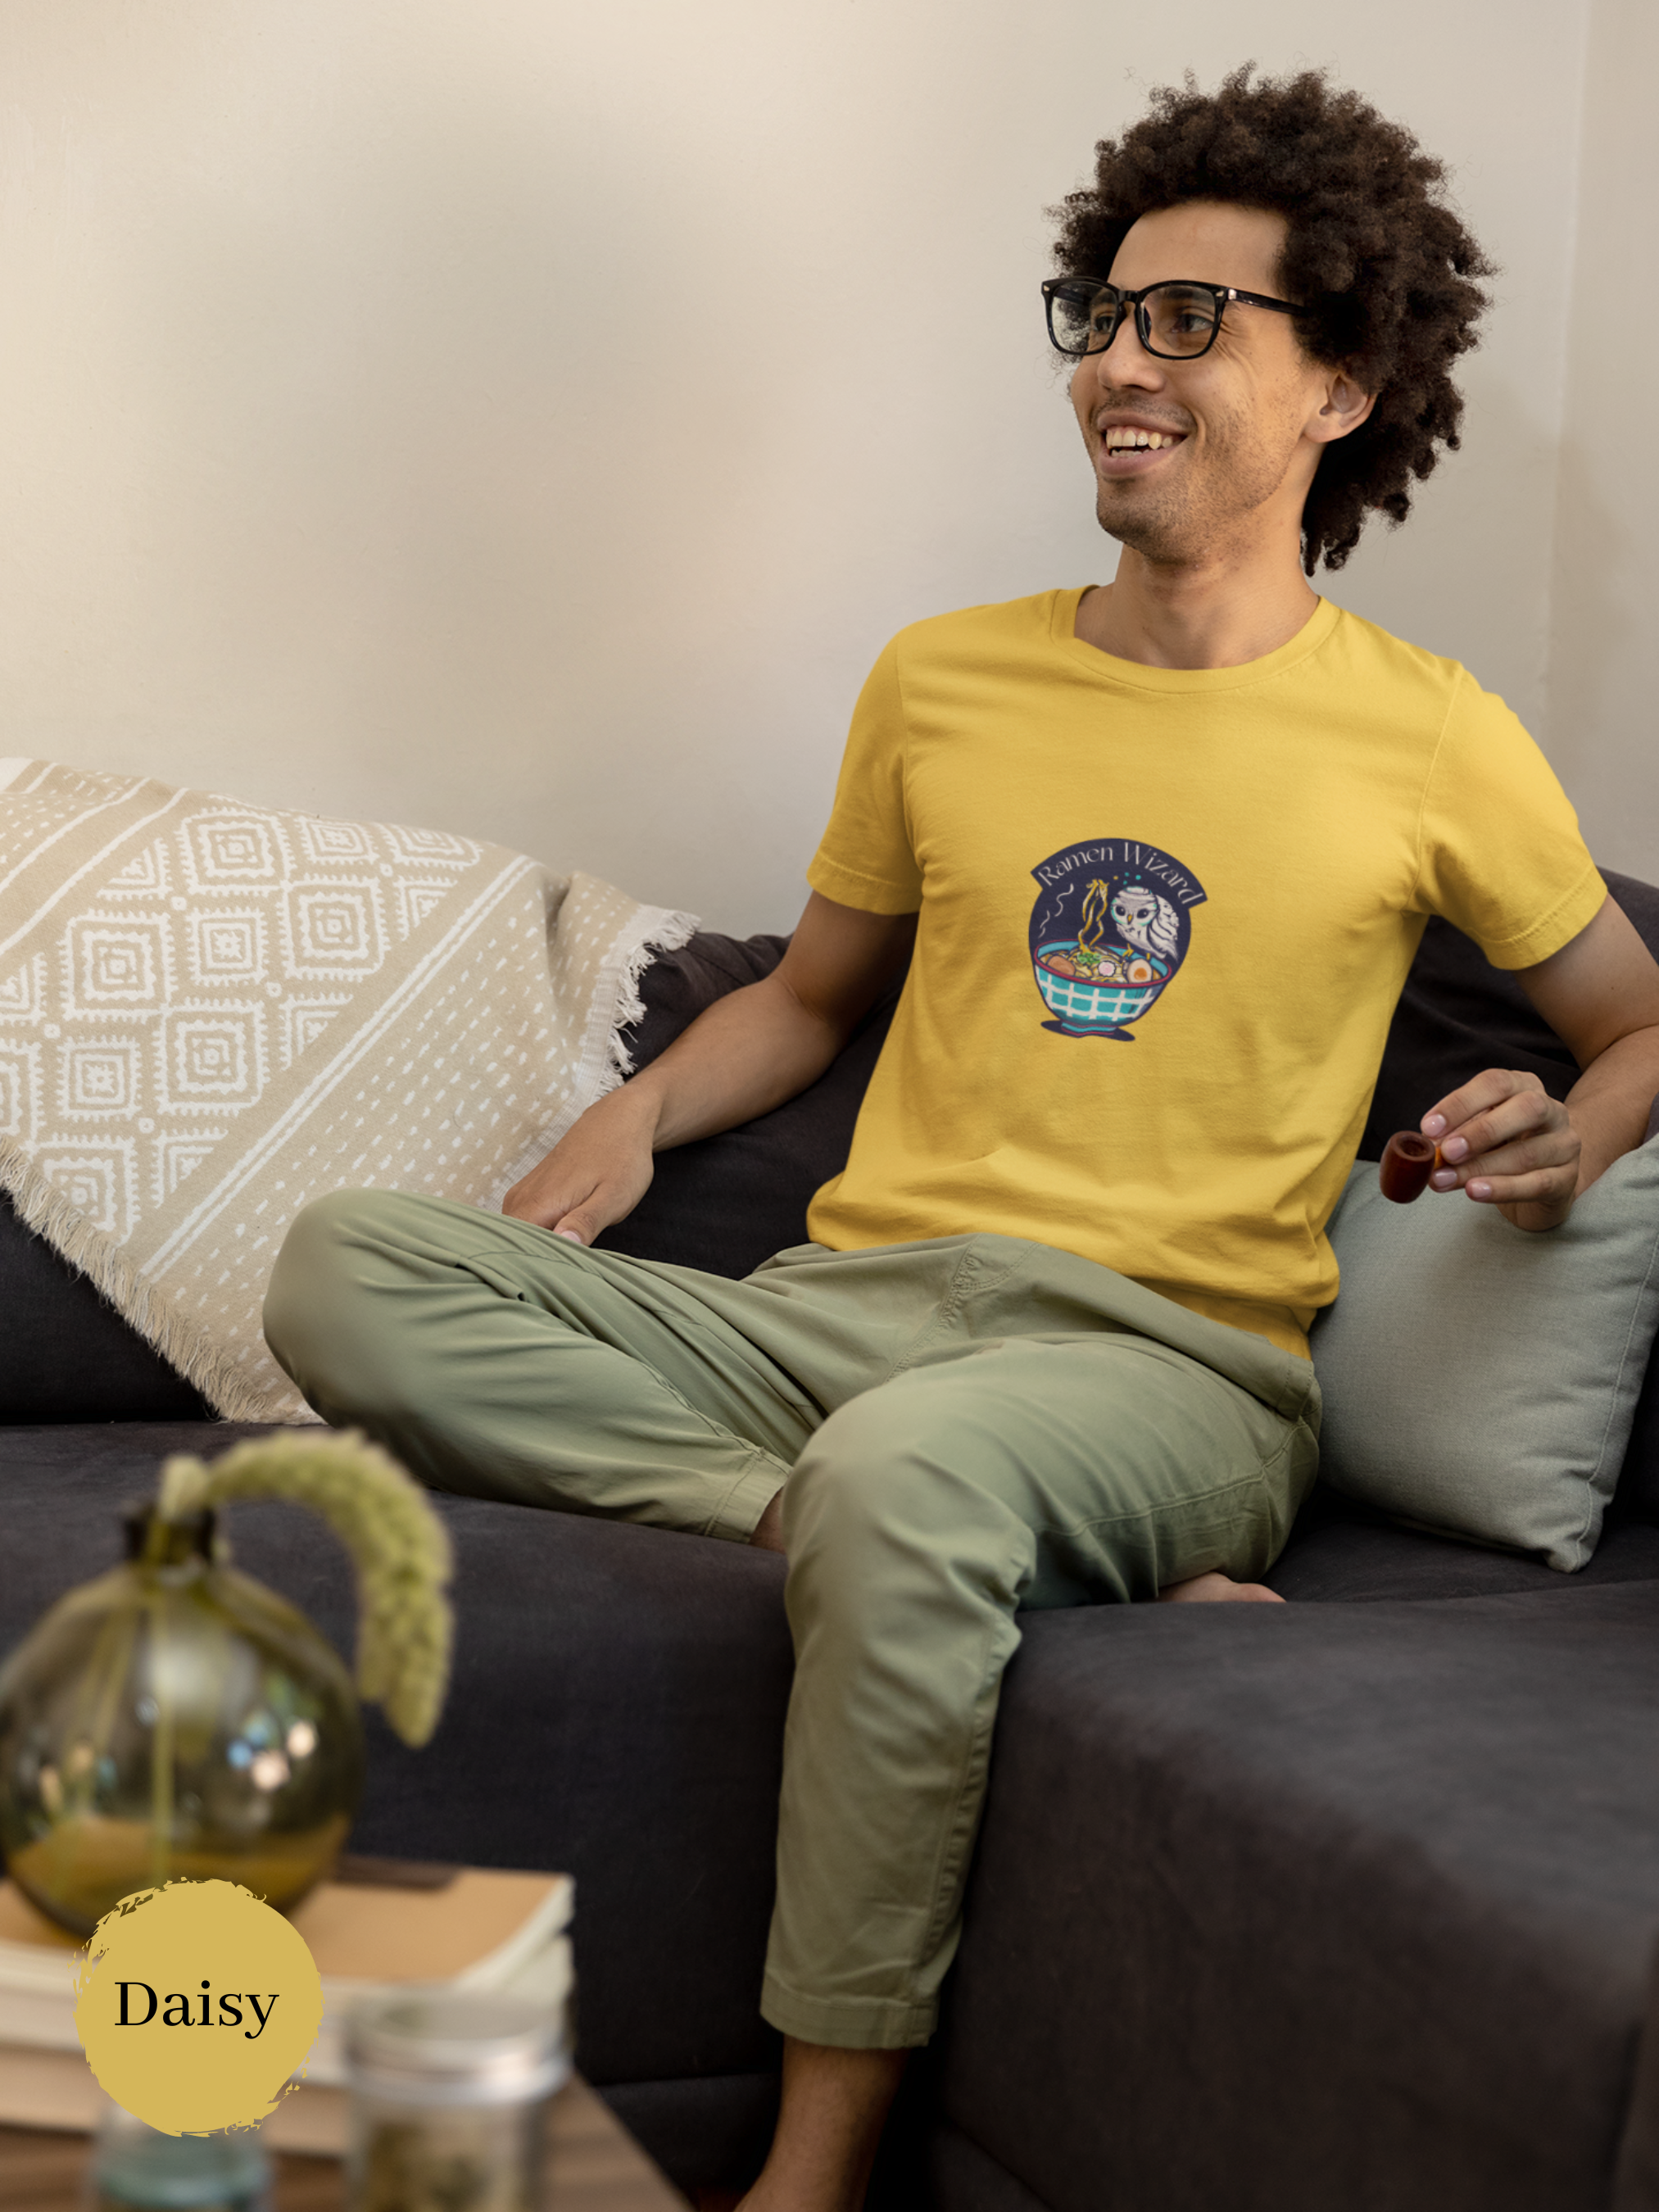 Ramen Wizard Owl T-Shirt: Japanese Shirt for Foodie Fans and Ramen Art Enthusiasts